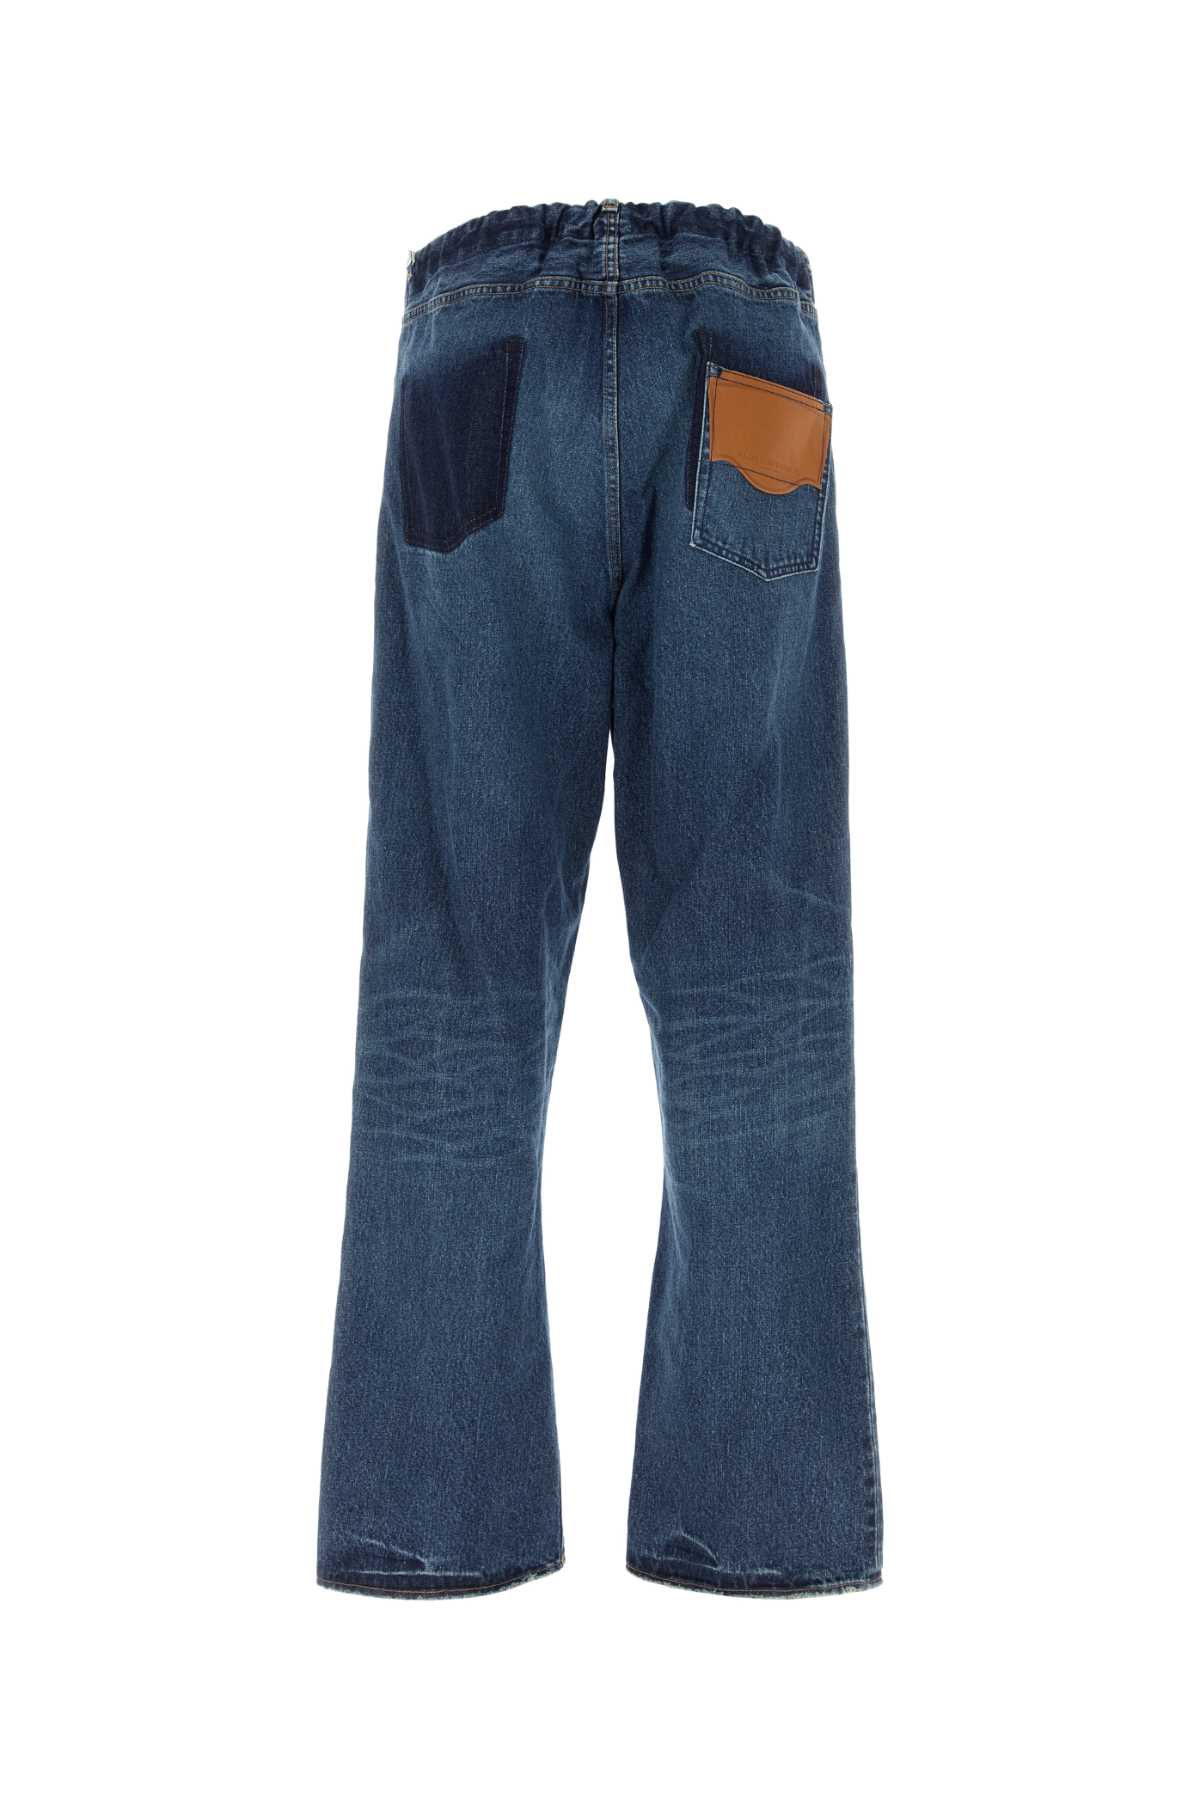 Miharayasuhiro Denim Jeans In Indigo